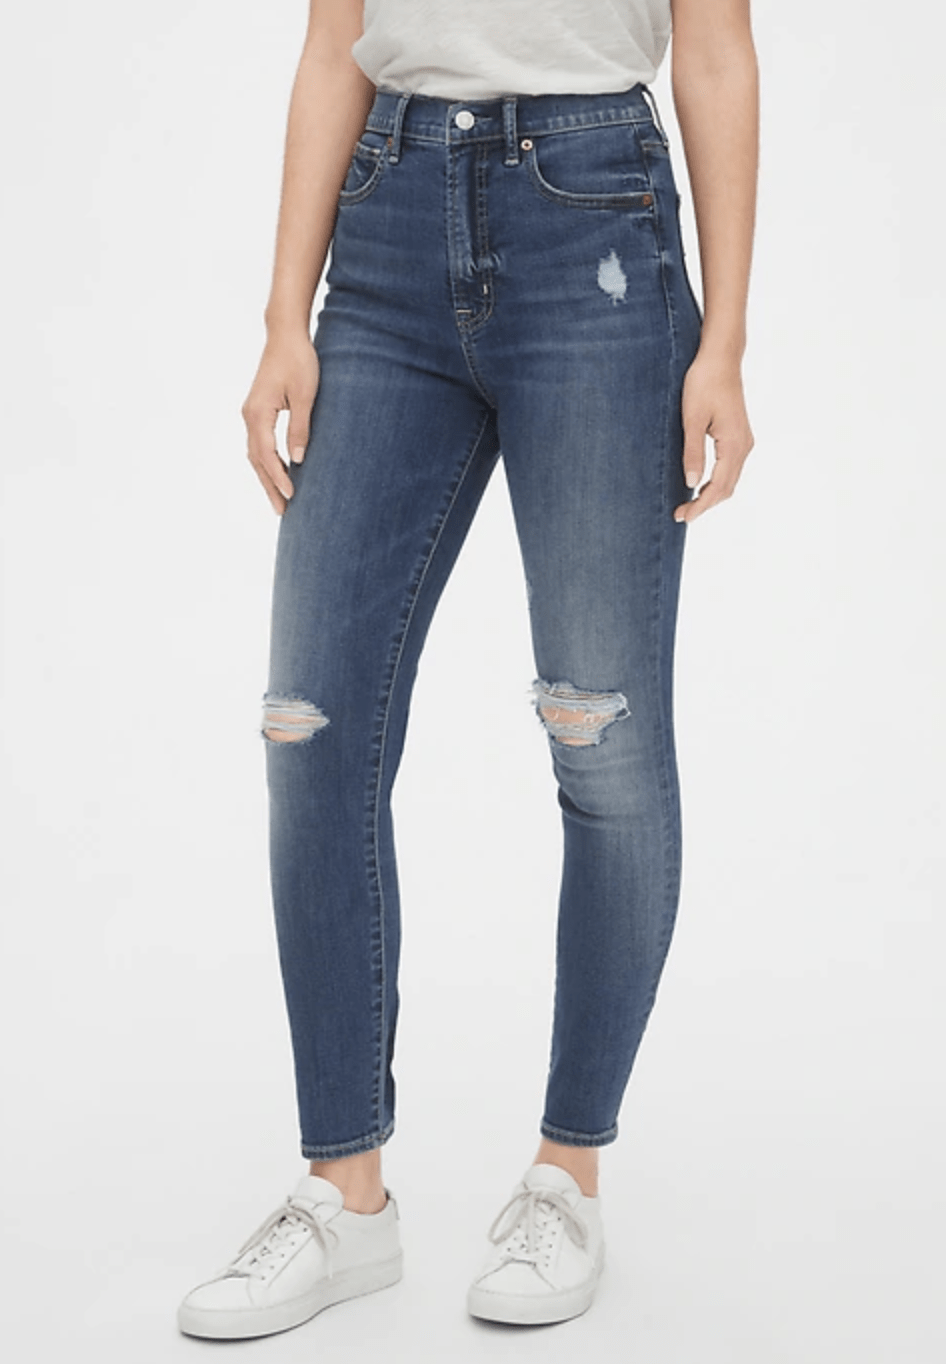 Gap Distressed Jeans